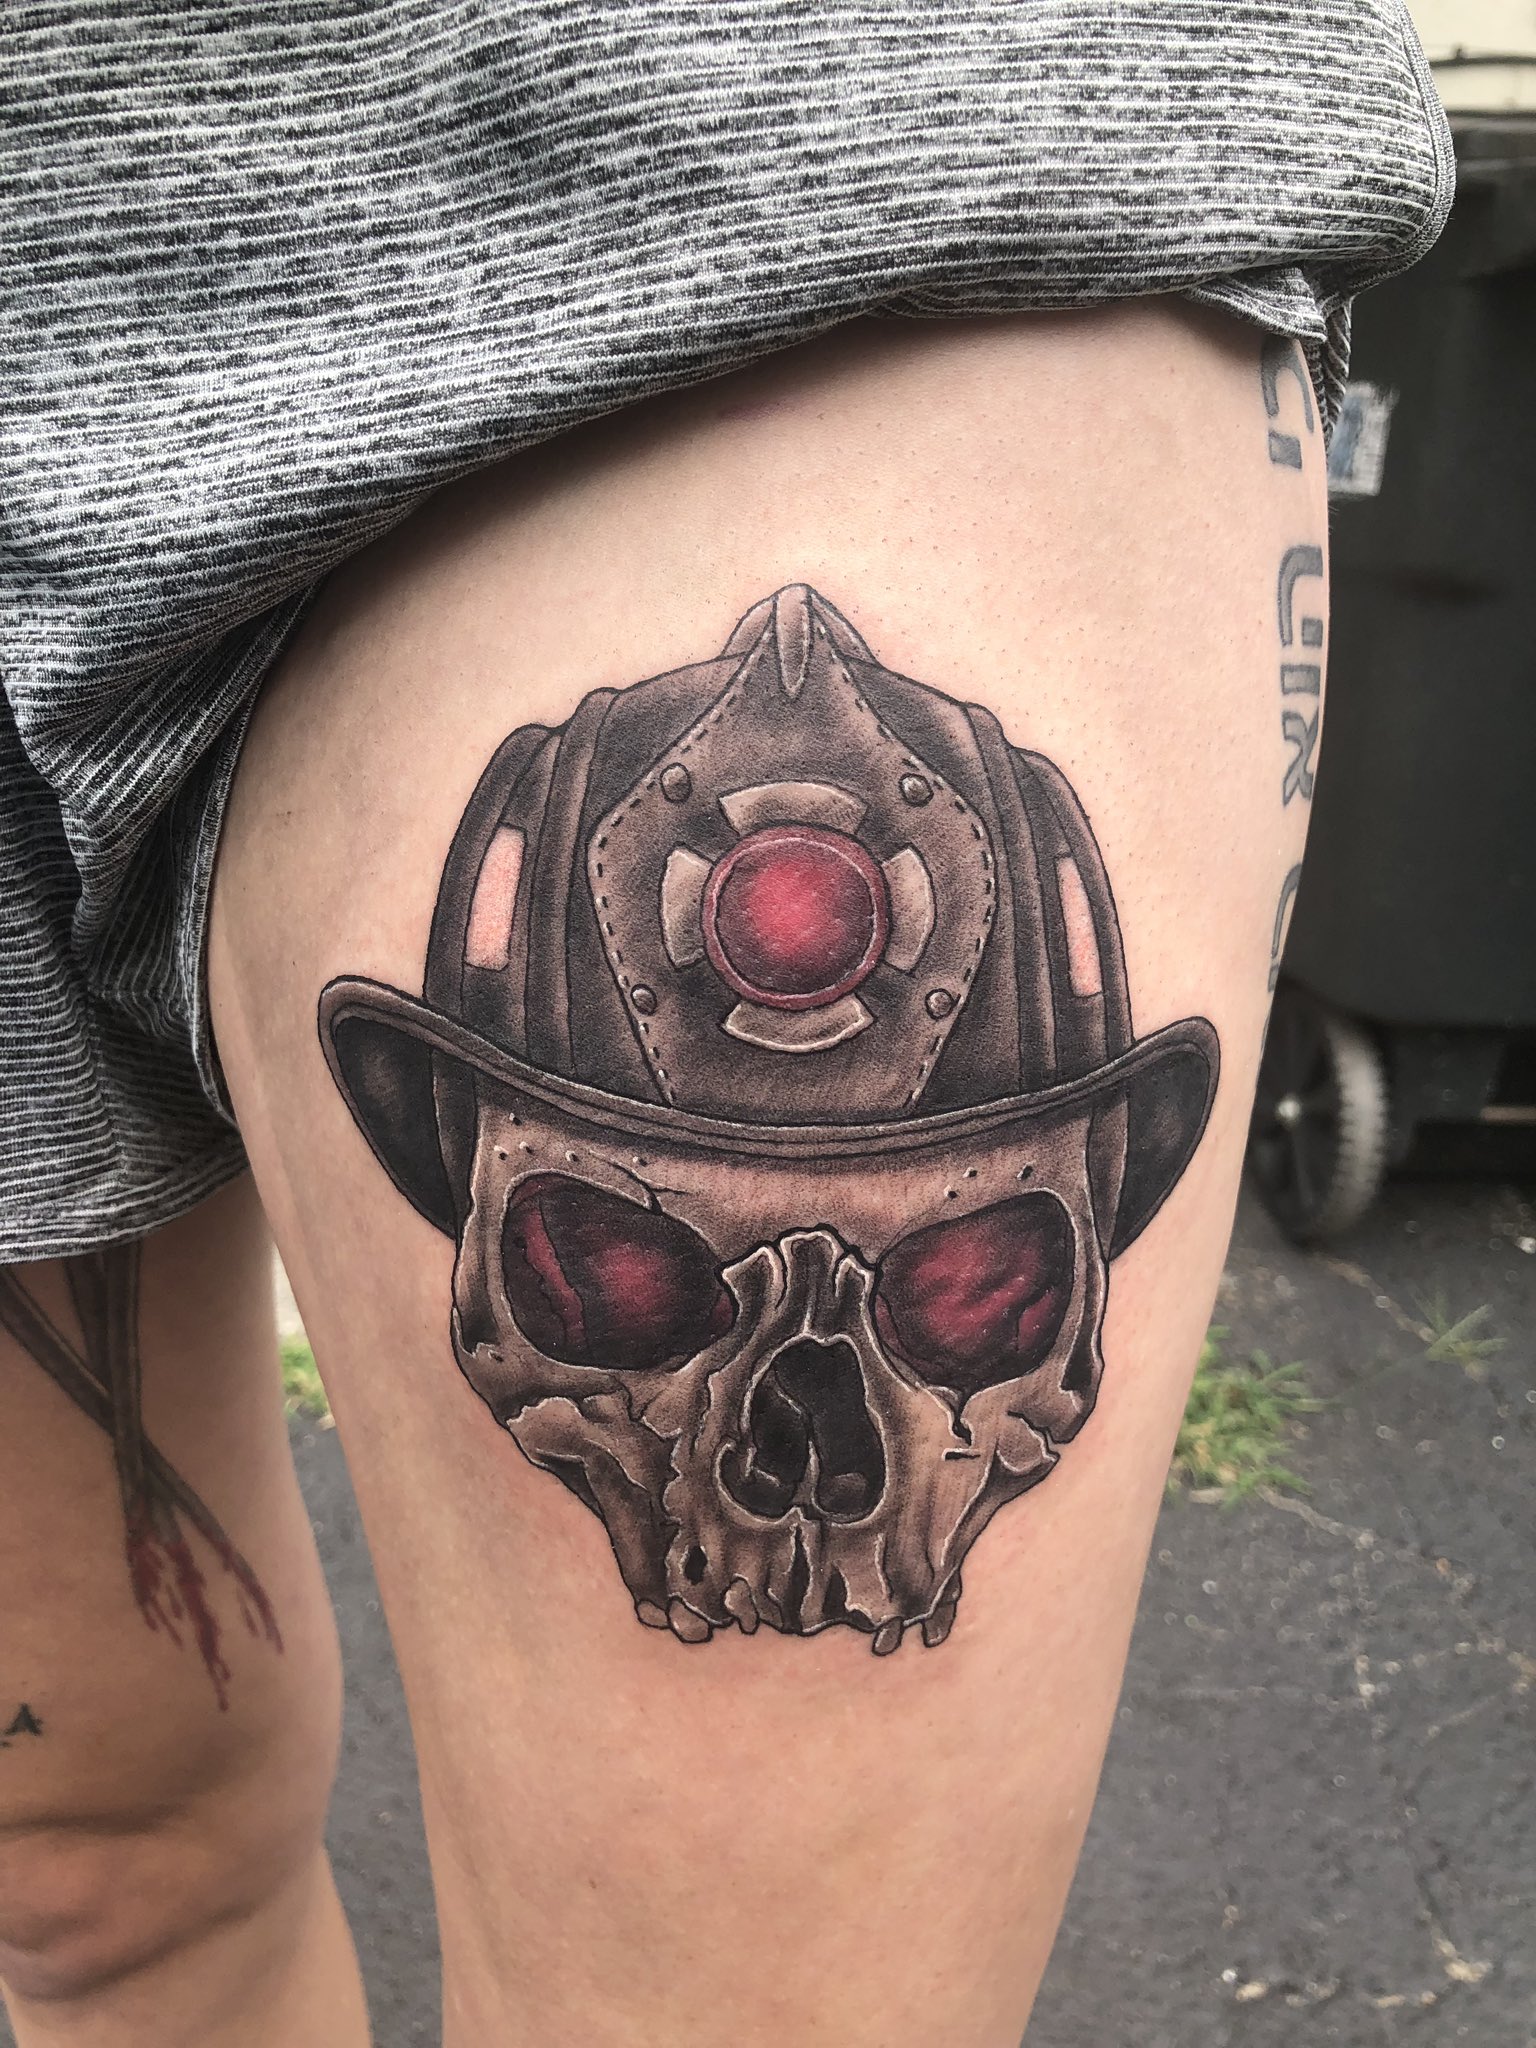 Latest Firefighter Tattoos  Find Firefighter Tattoos